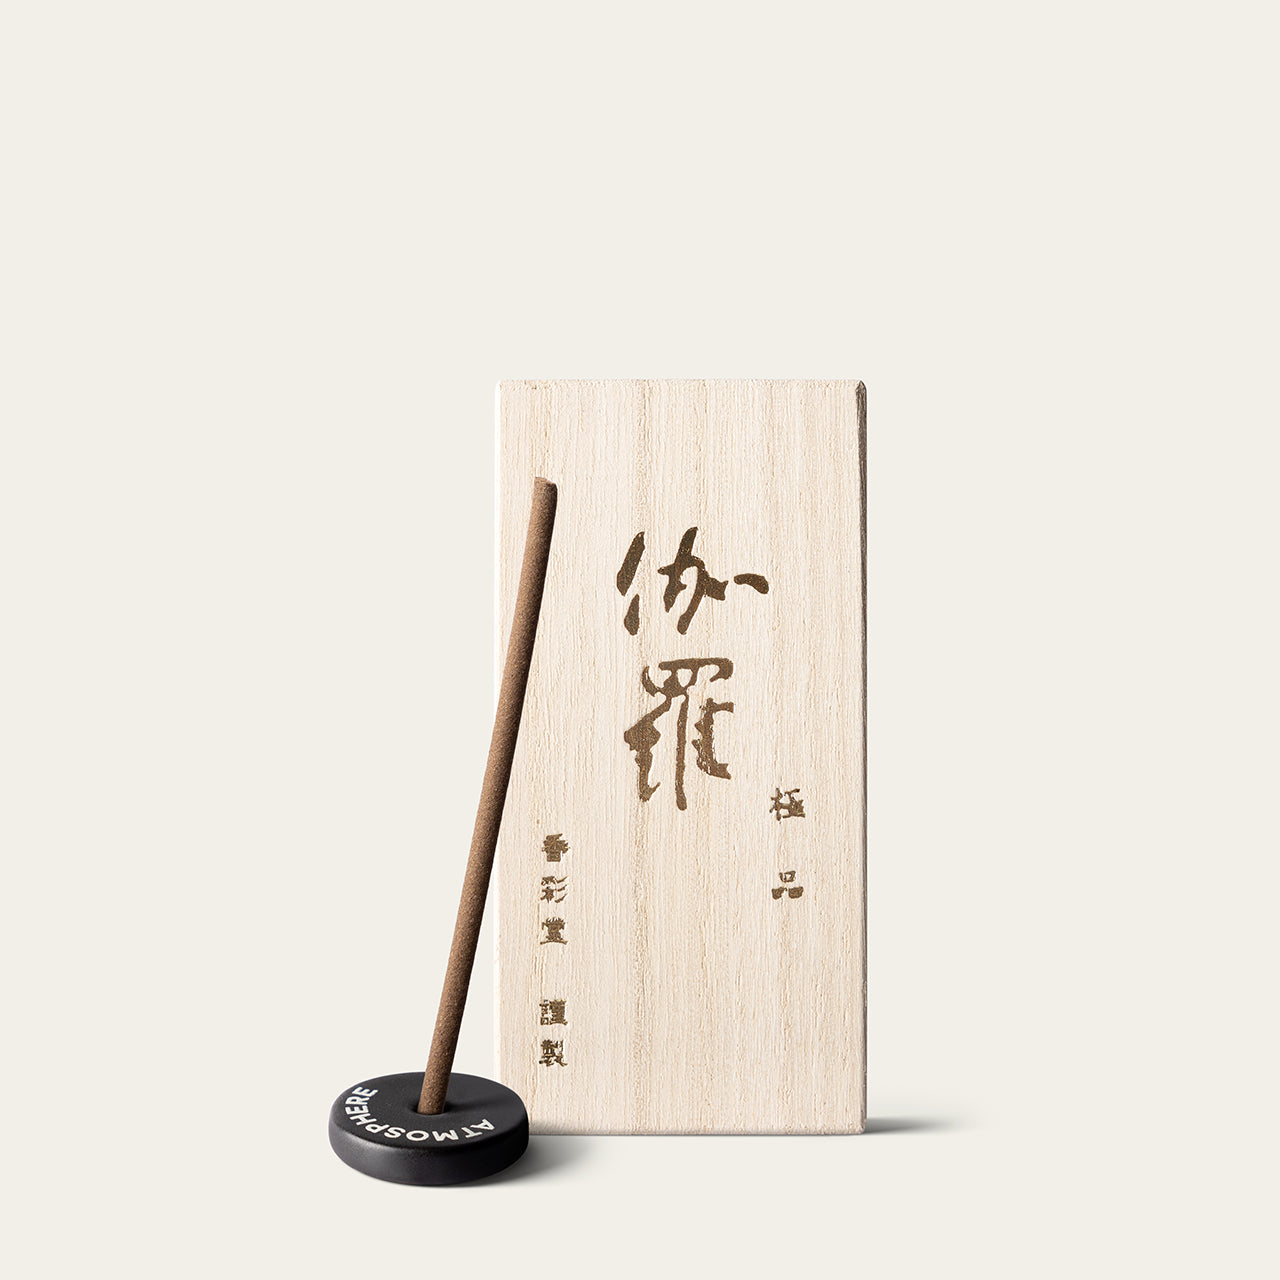 Kousaido Premium Kyara Supreme Japanese incense sticks (55 sticks) with Atmosphere ceramic incense holder